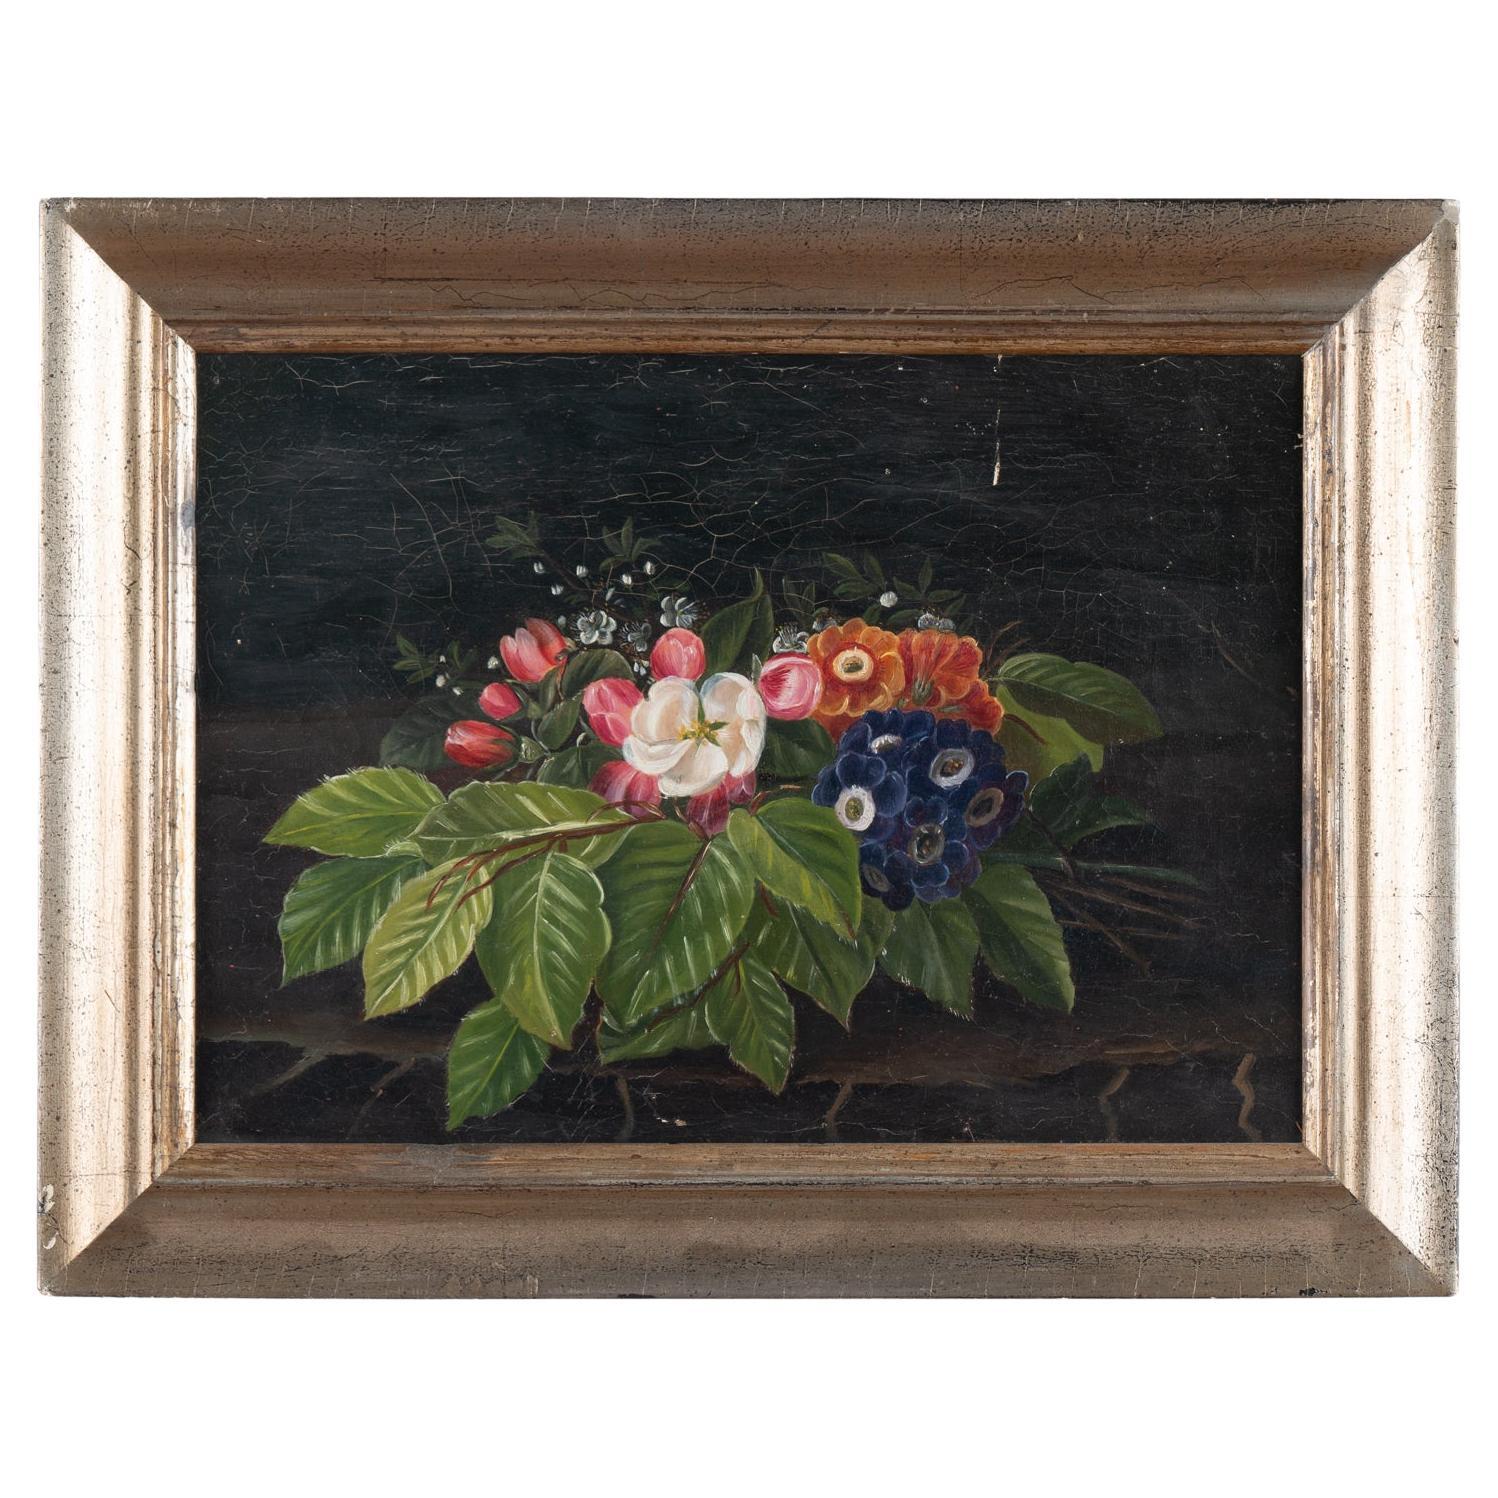 Original Oil on Canvas Still Life Painting of Flowers, Denmark circa 1860-80